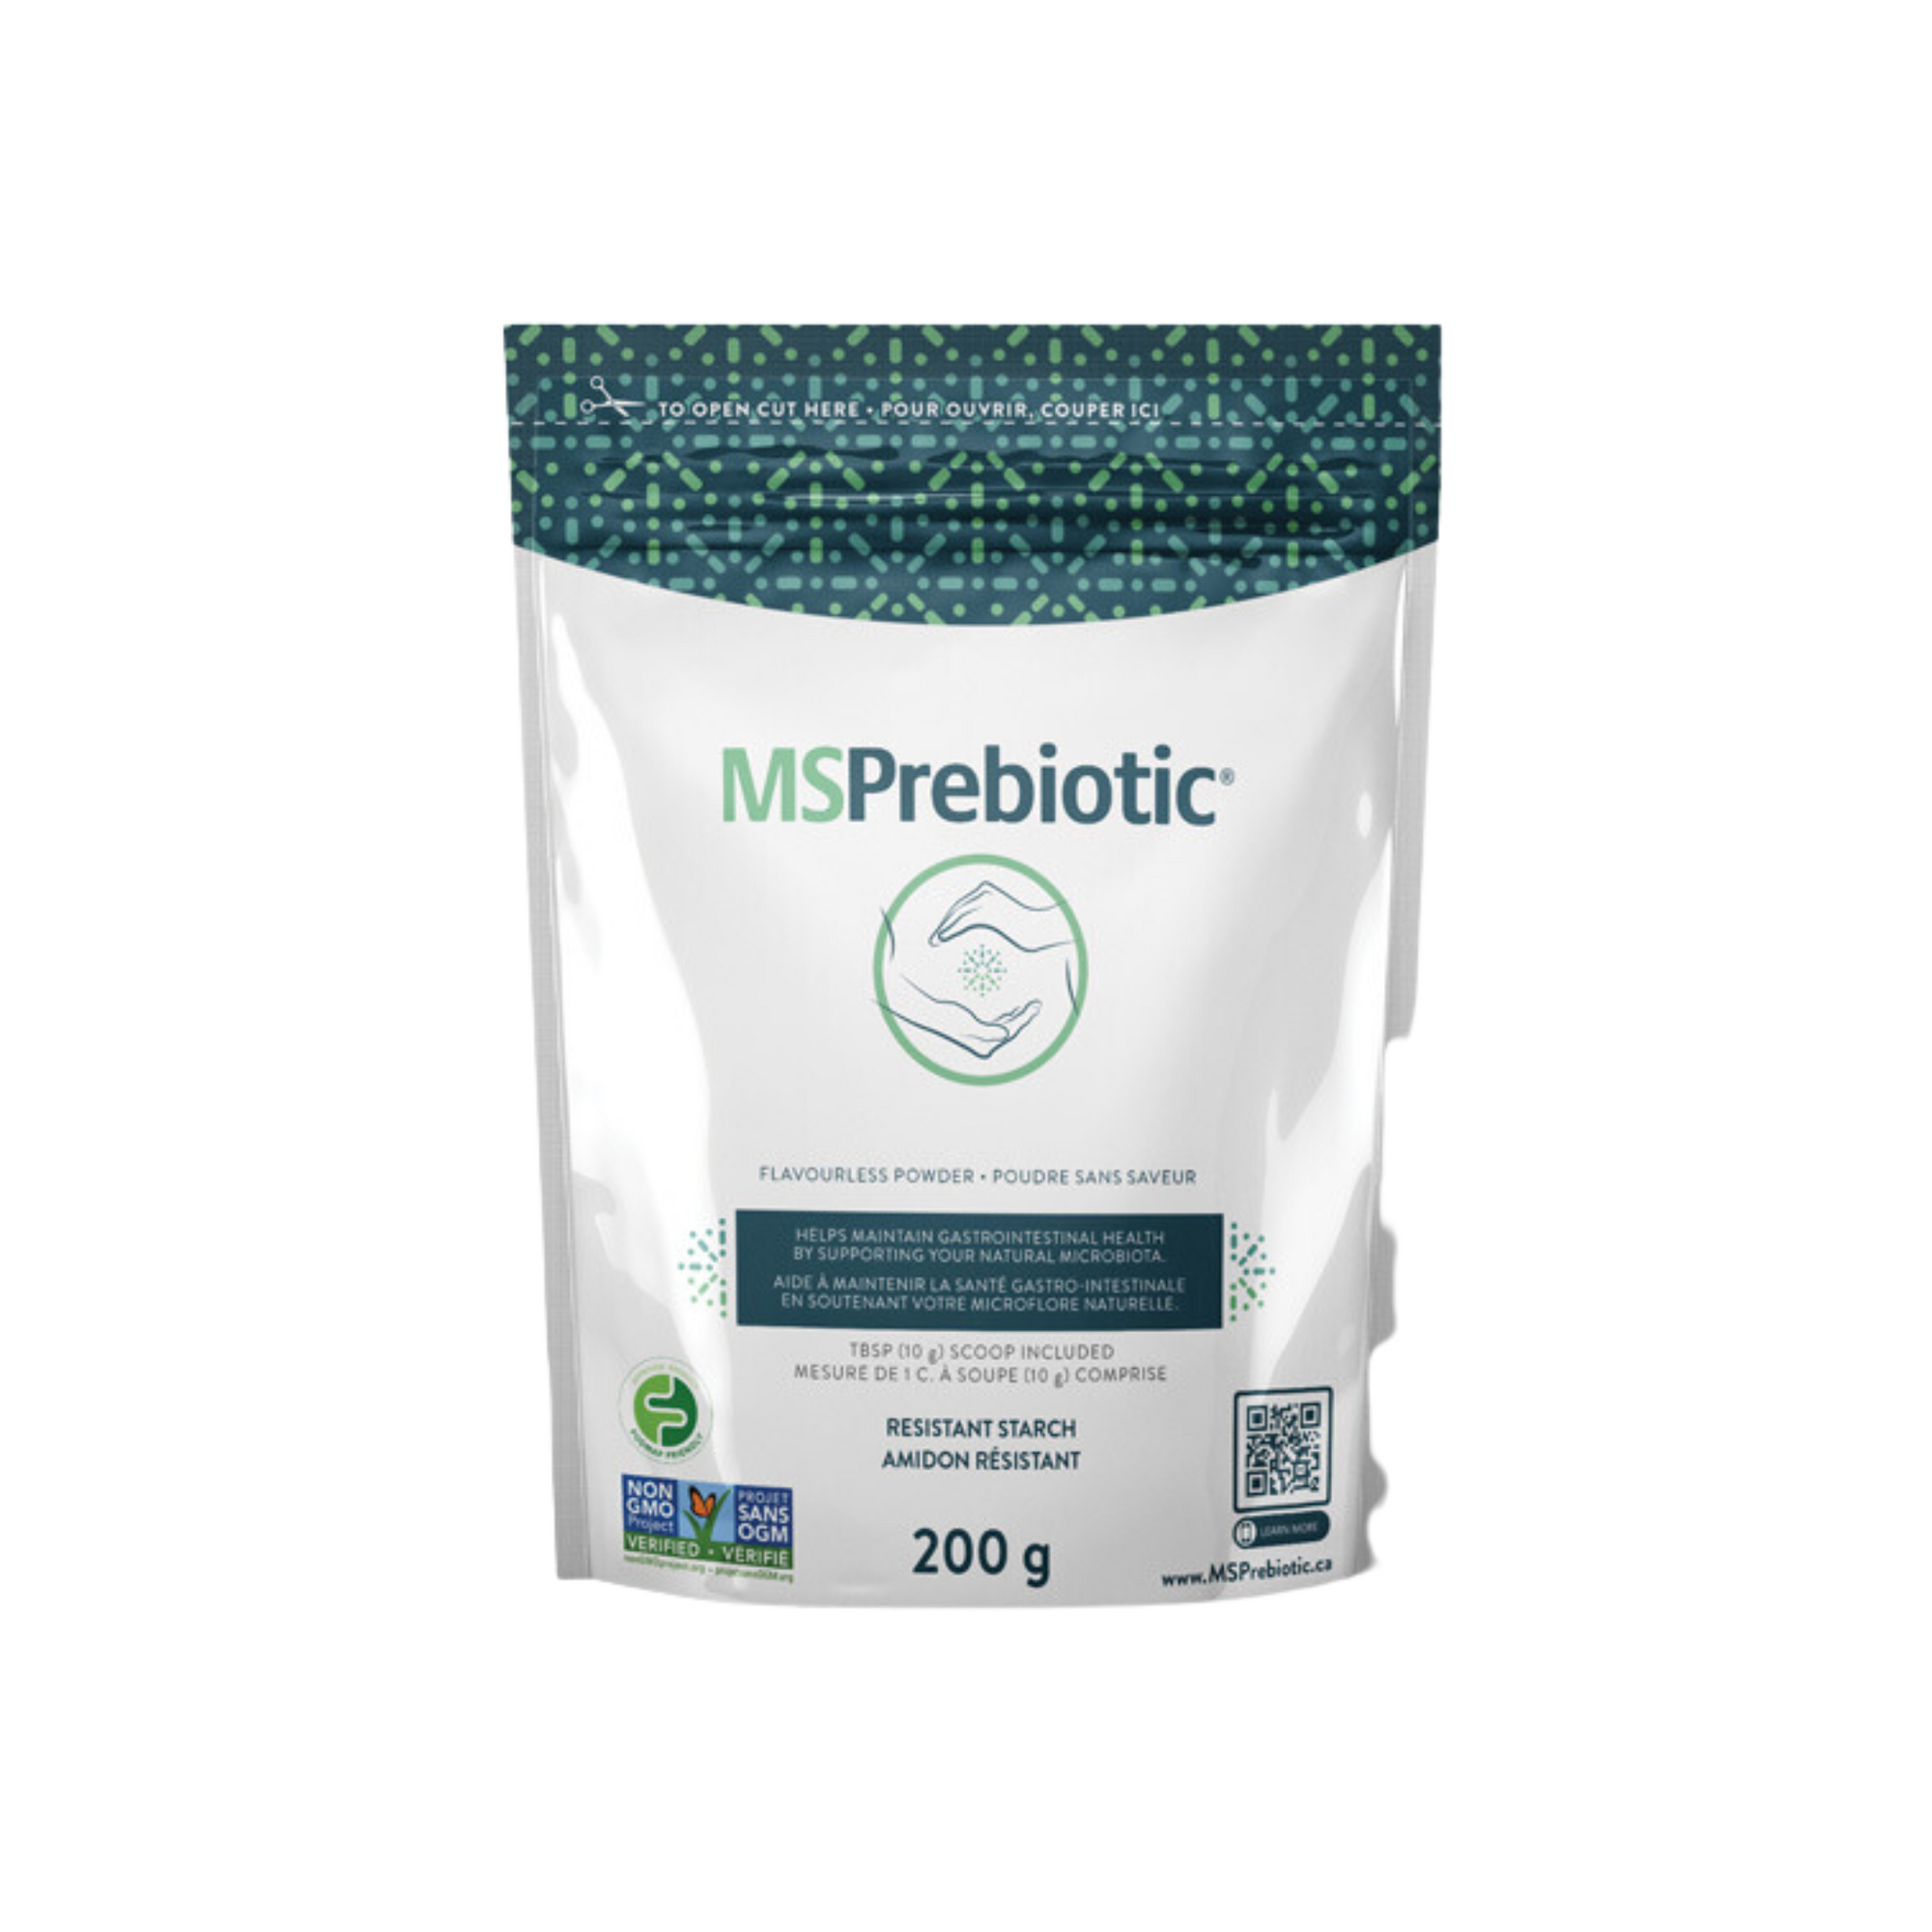 MSPrebiotic Prebiotic Powder 200g